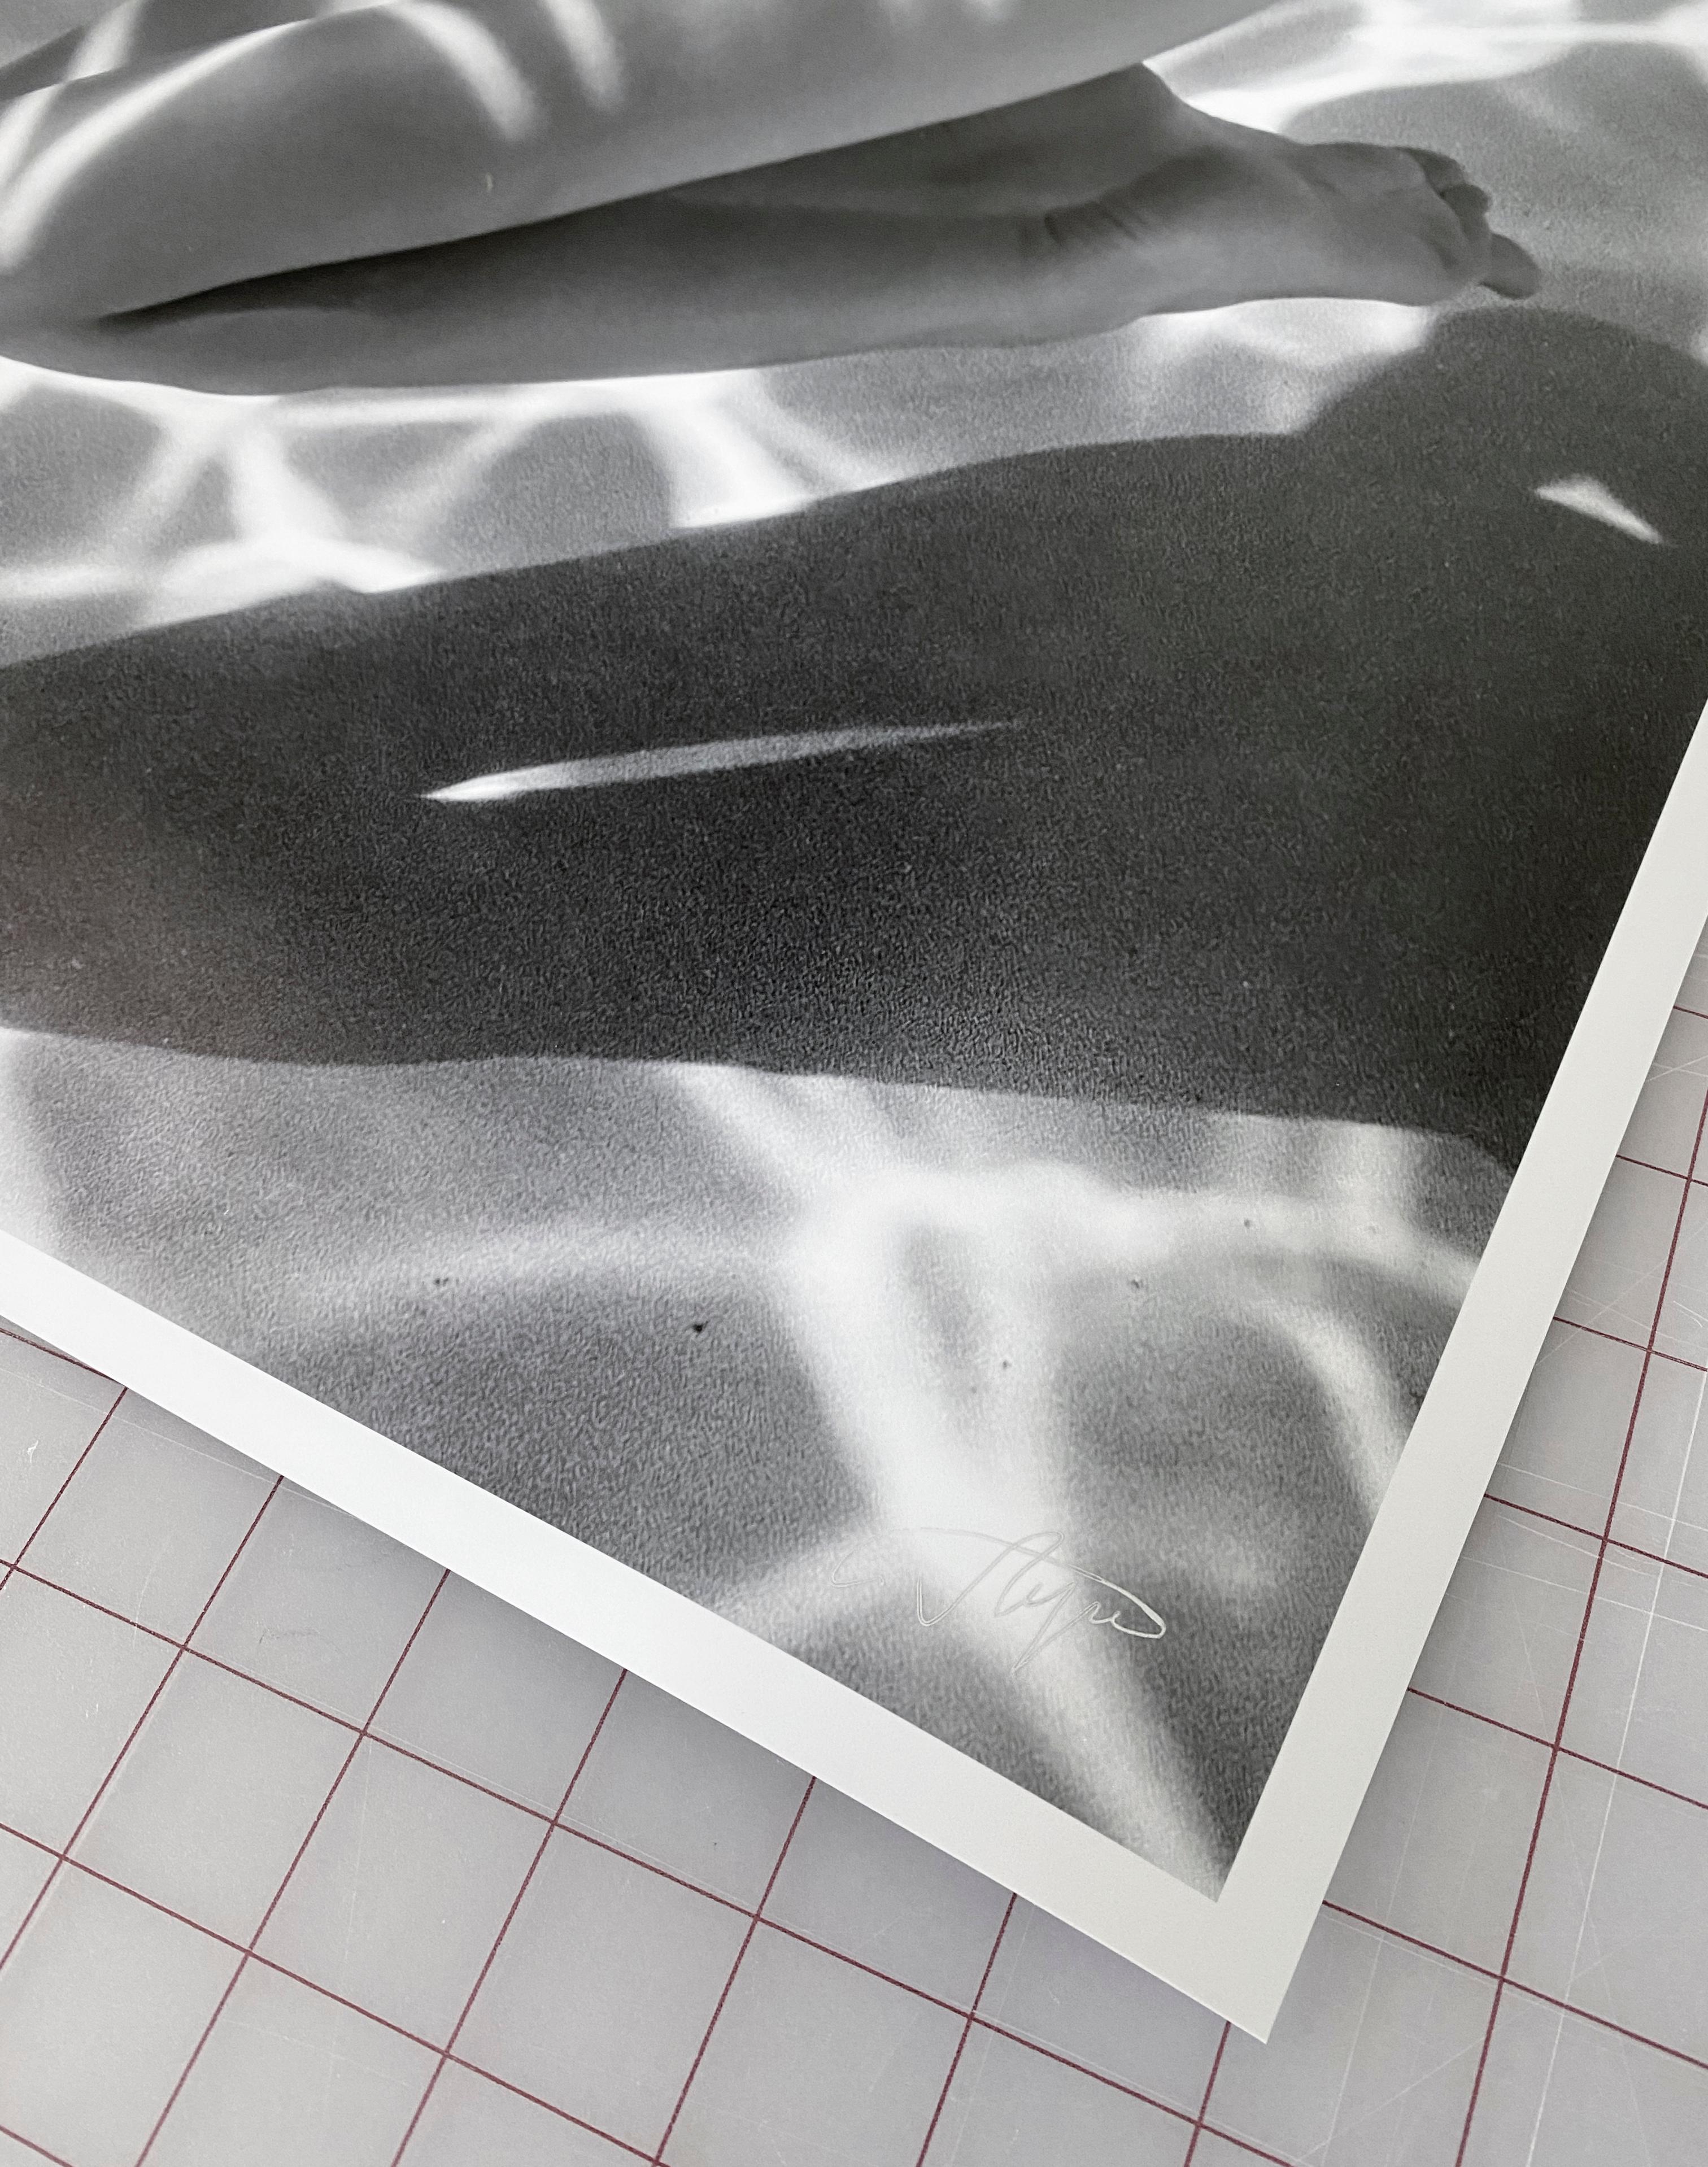 Wavering - underwater nude b&w photograph - archival pigment 52x35